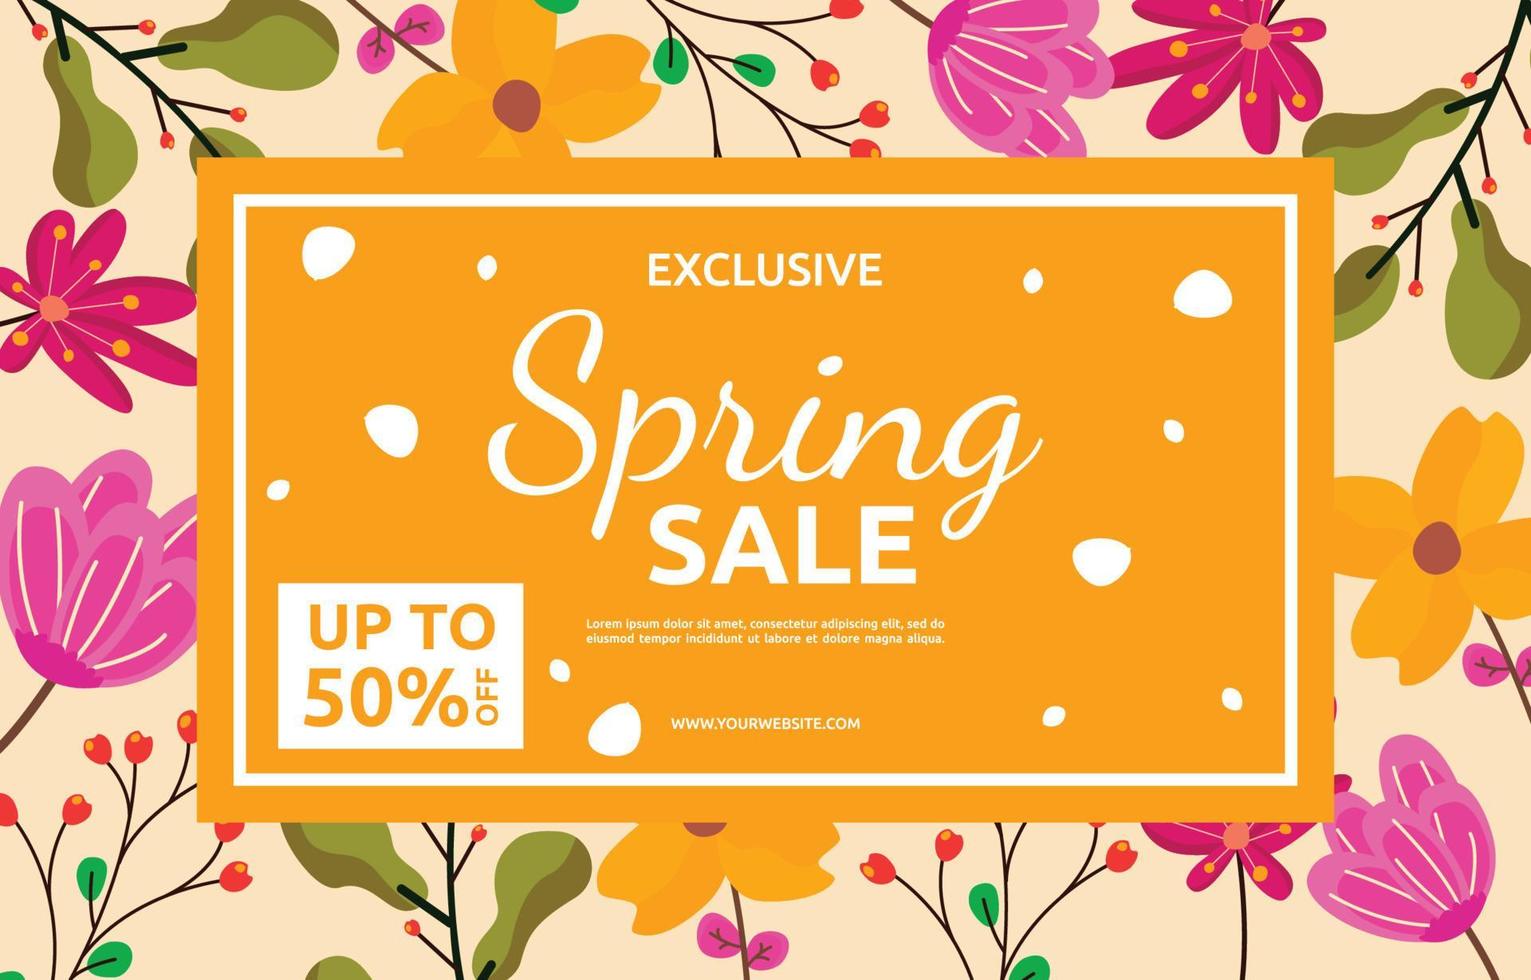 Exclusive Spring Sale Flower Floral Season Marketing Banner Business vector